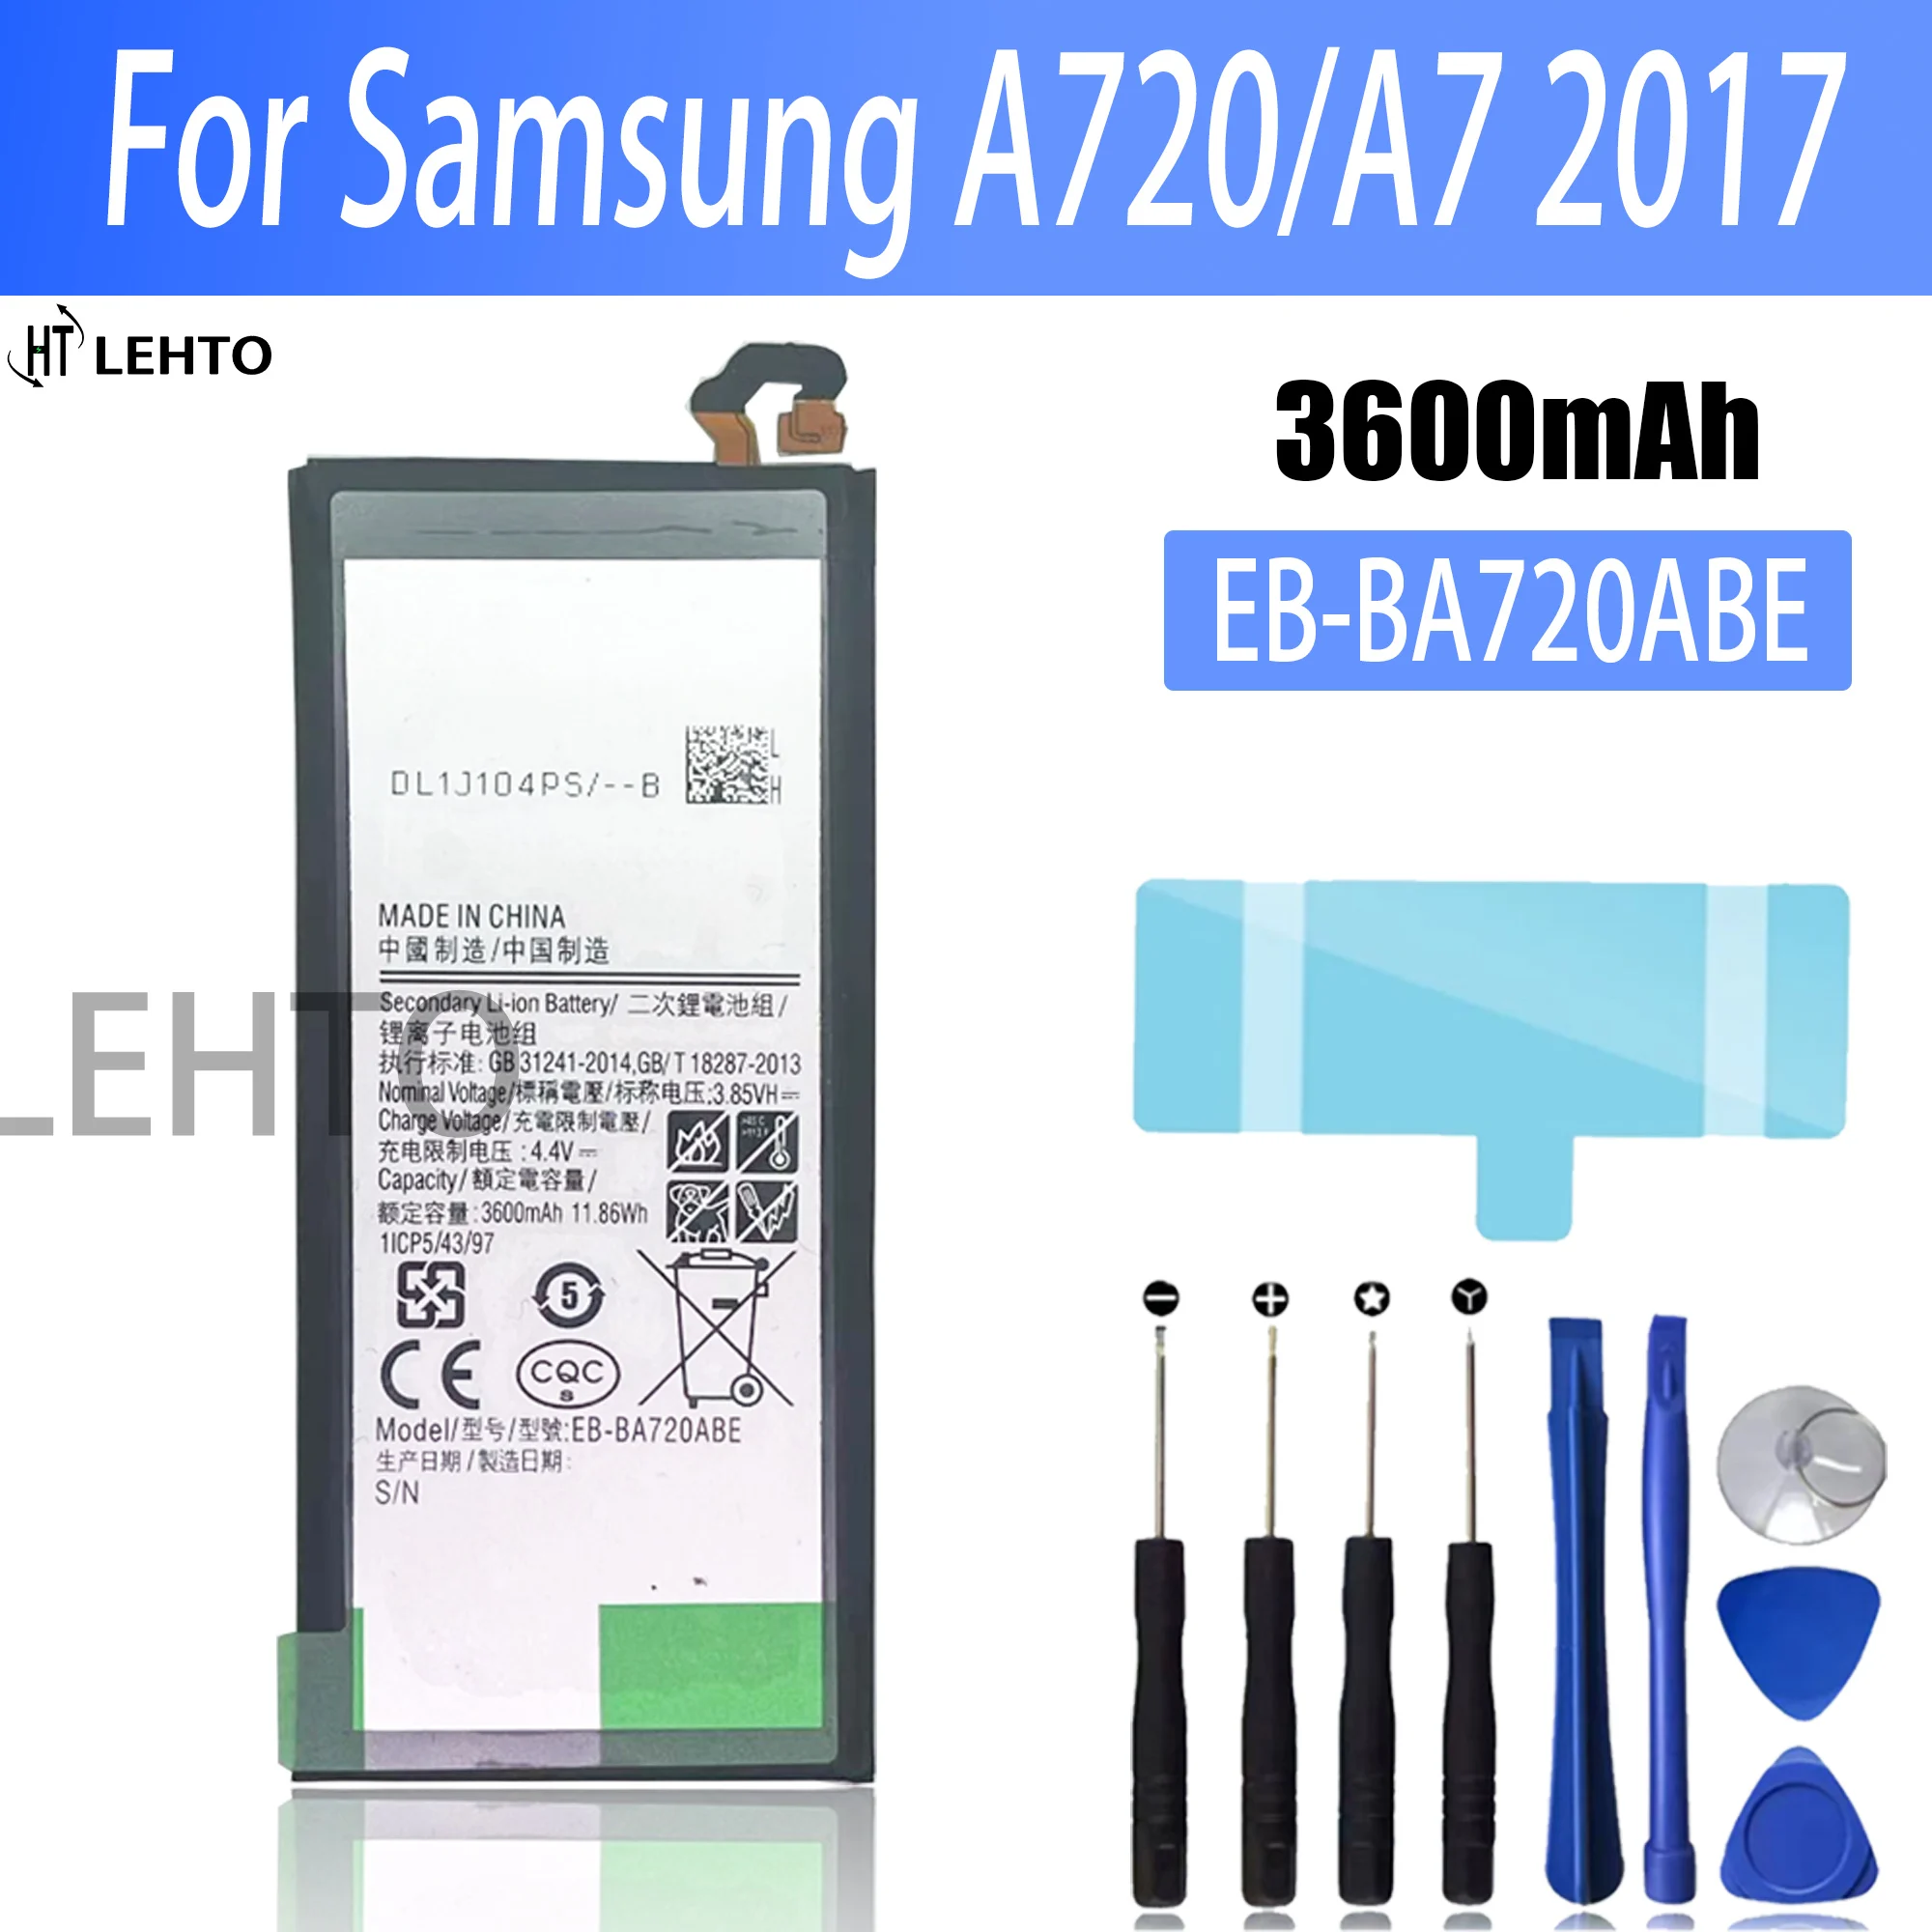 

100% Original EB-BA720ABE 3600mAh Battery For Samsung Galaxy A7 2017 version A720 SM-A720 A720F SM-A720S A720F/DS